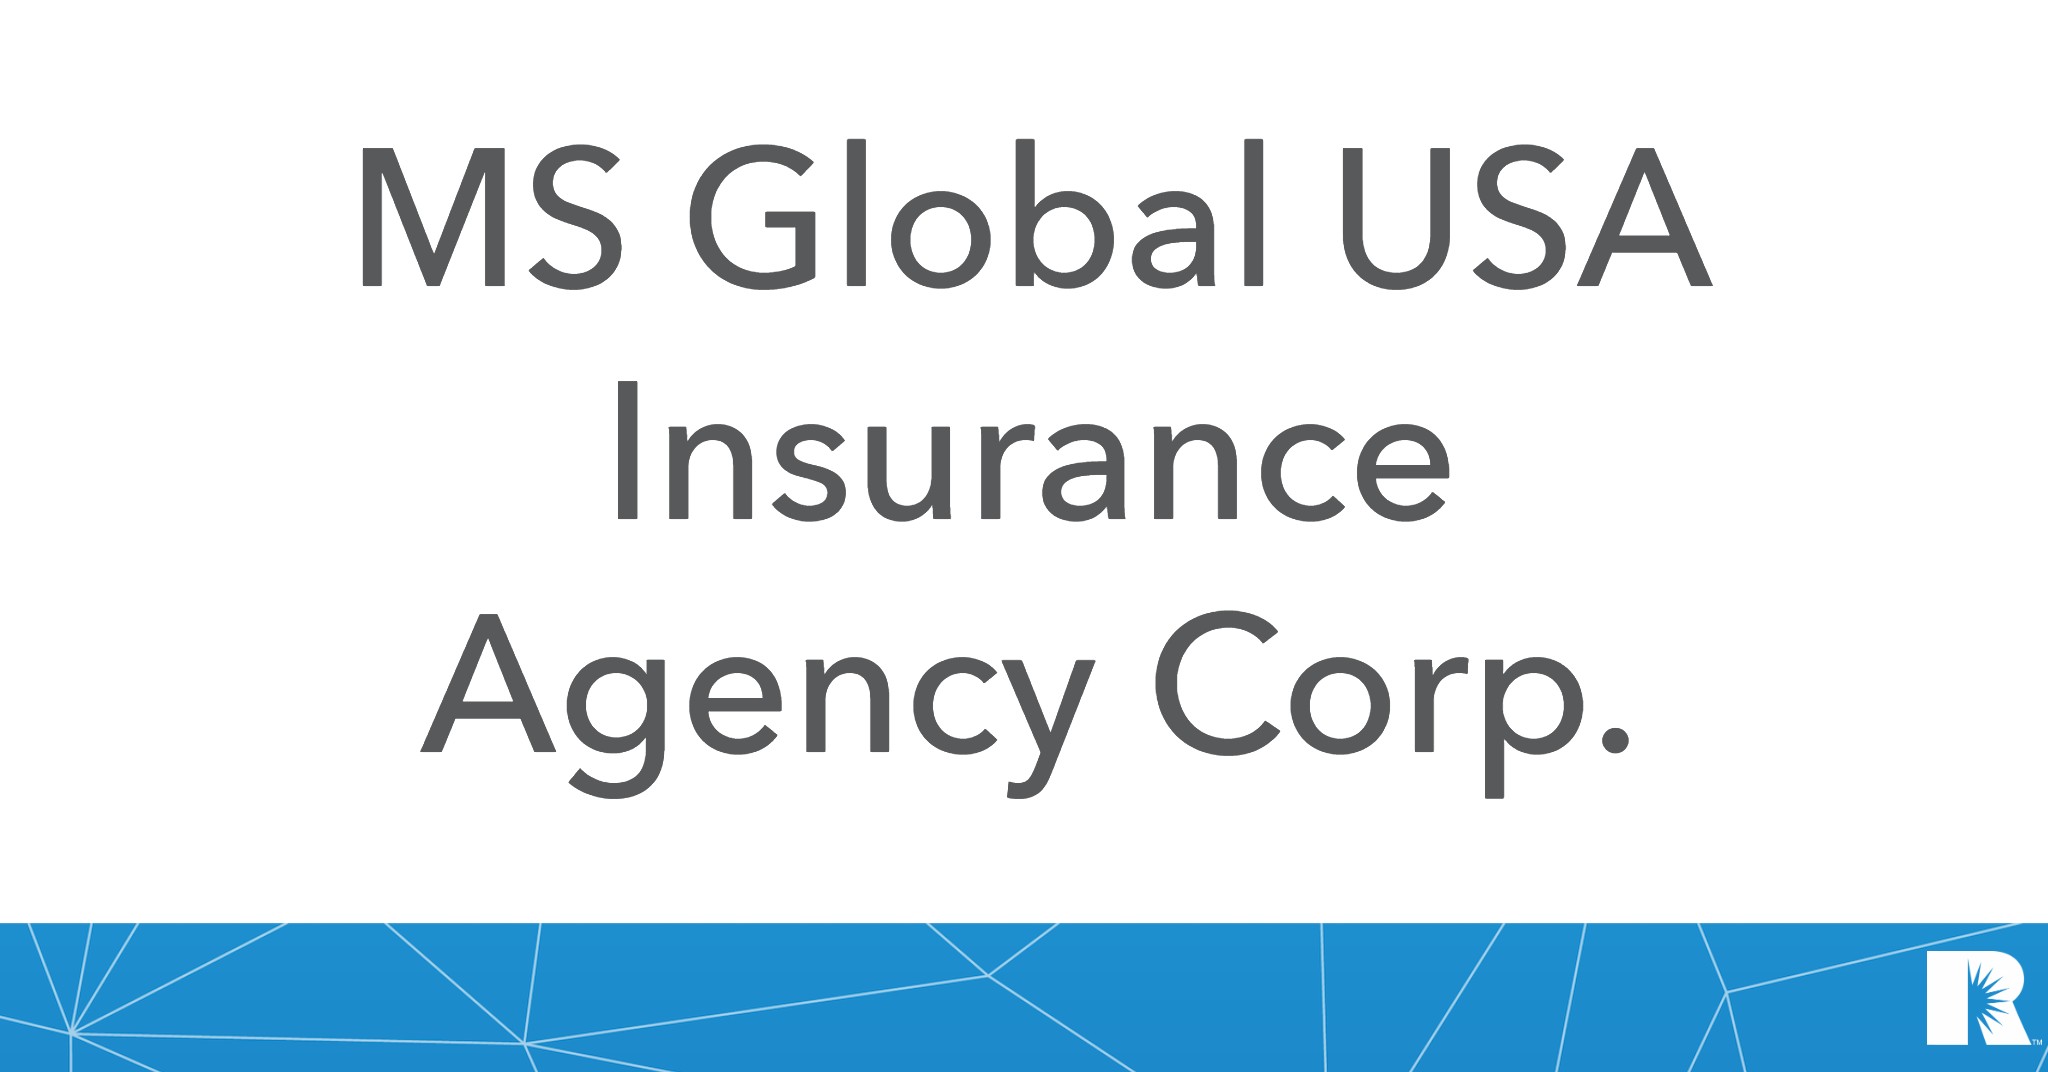 Agency logo for MS Global USA Insurance Agency Corp.